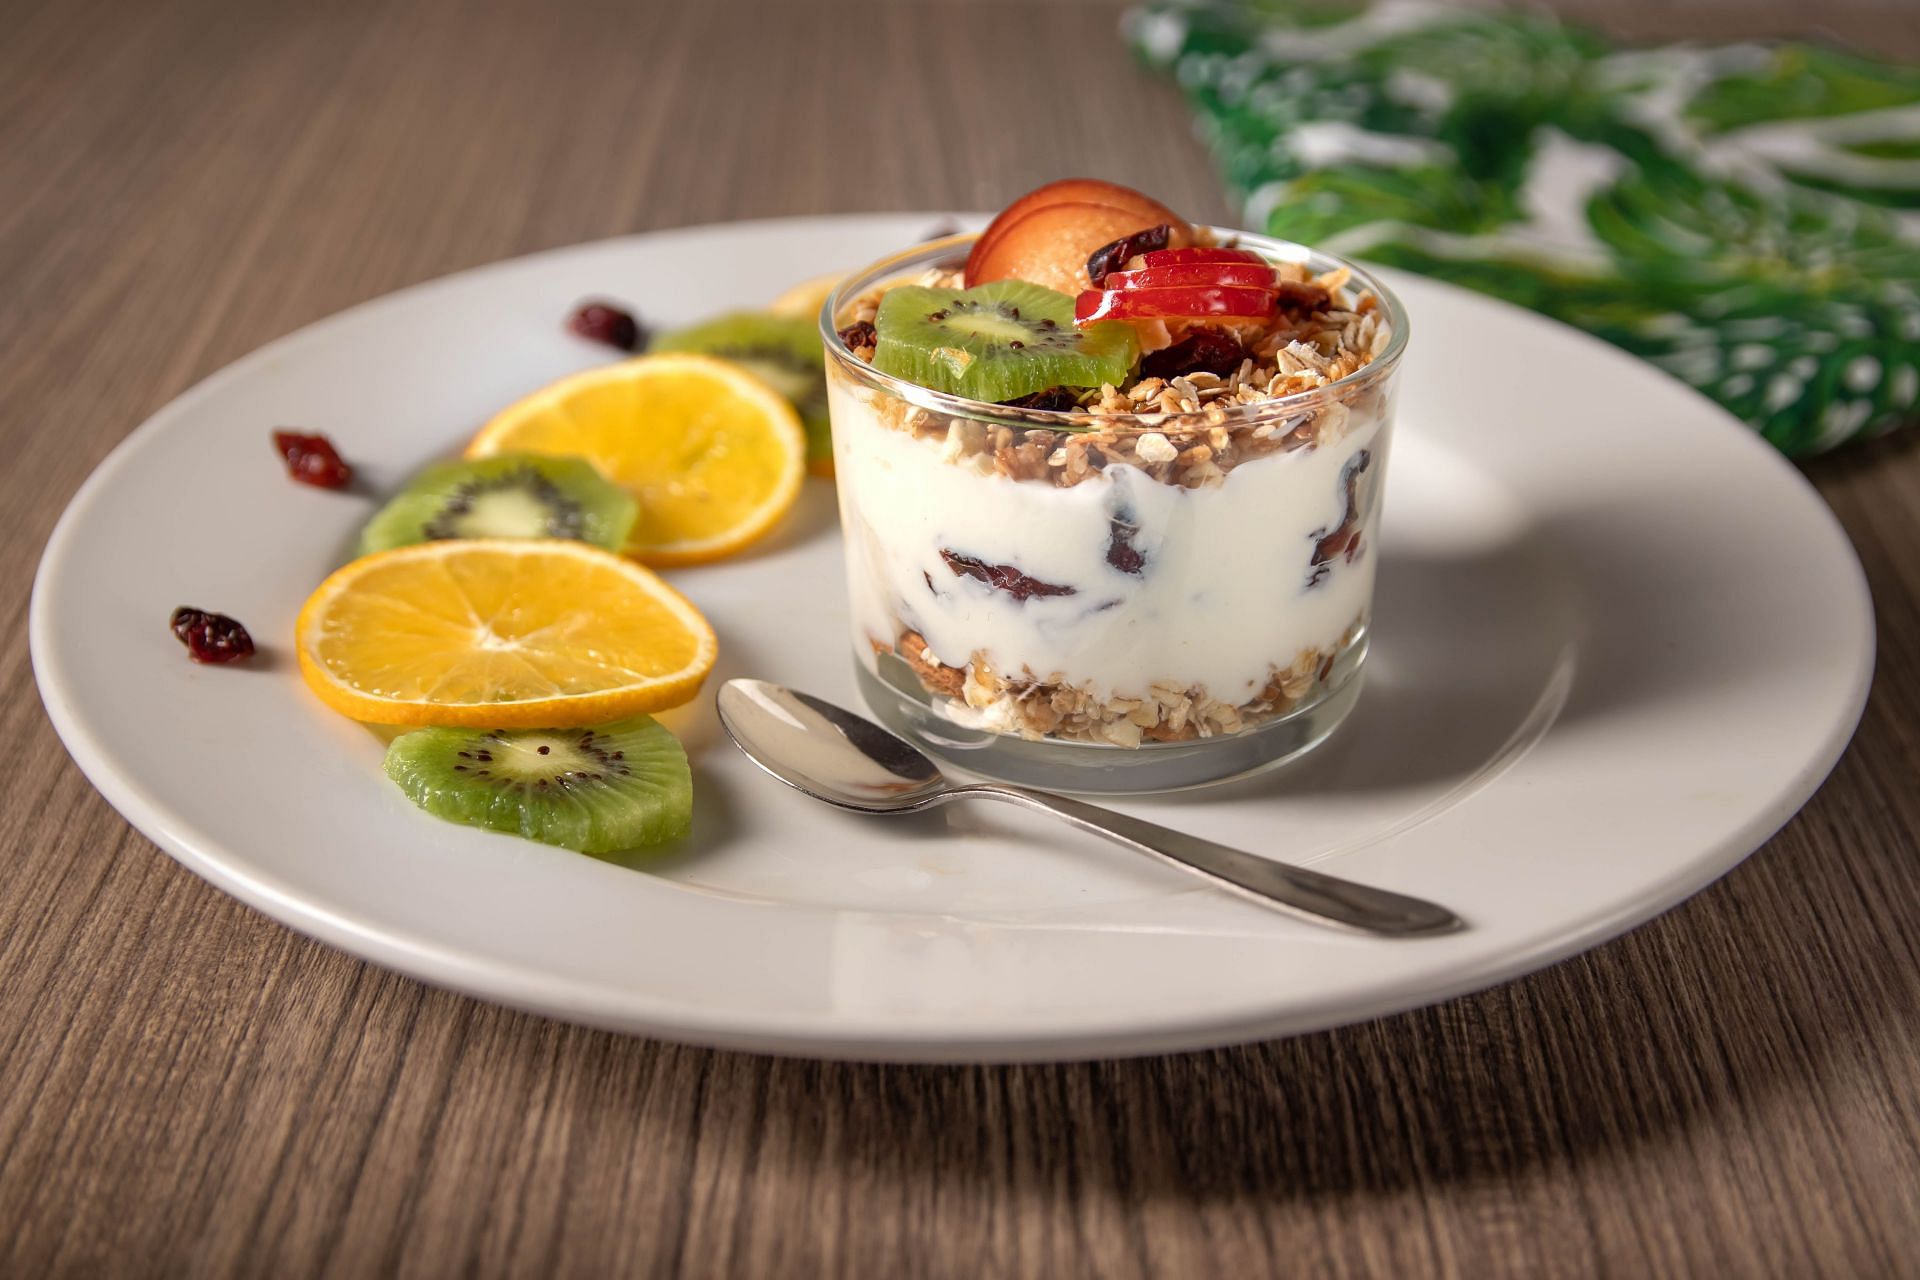 Yogurt with Fruits are an amazing combination (Image via Unsplash/Daniel Cabriles)